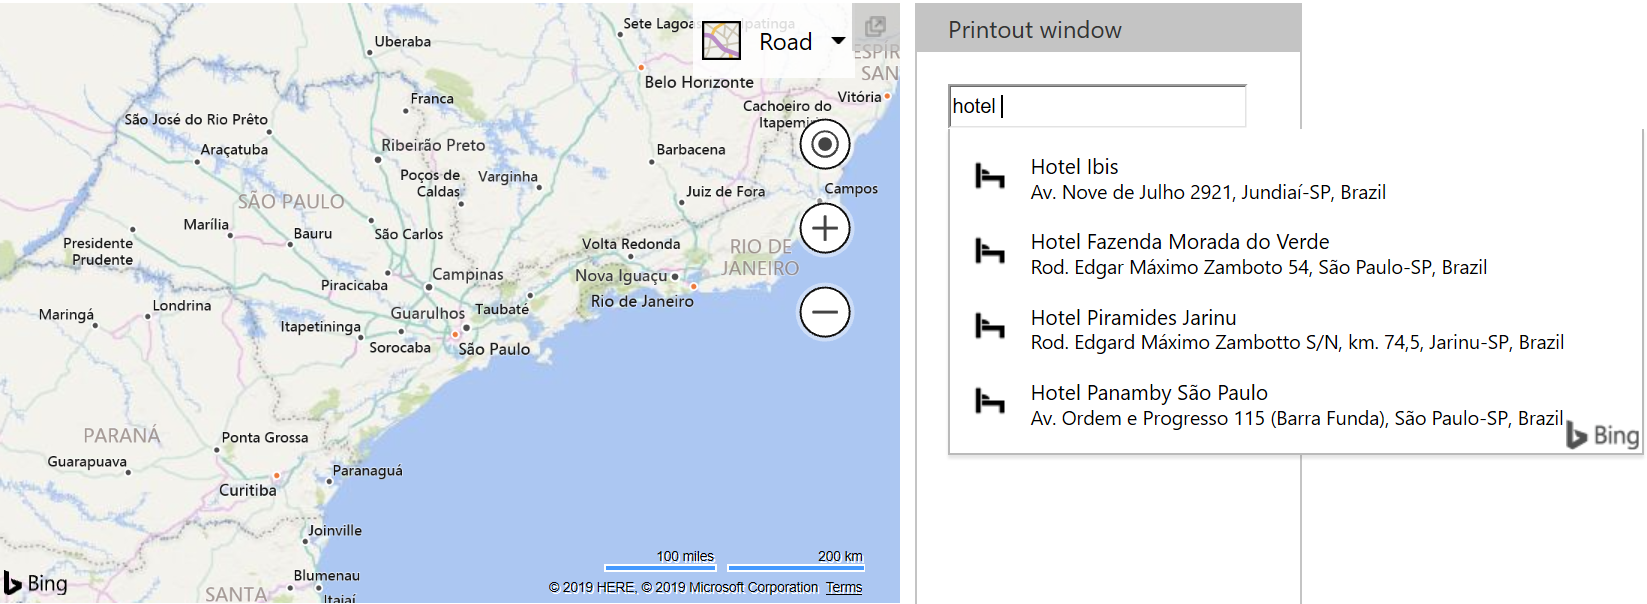 Bing Maps Autosuggest - Brazil